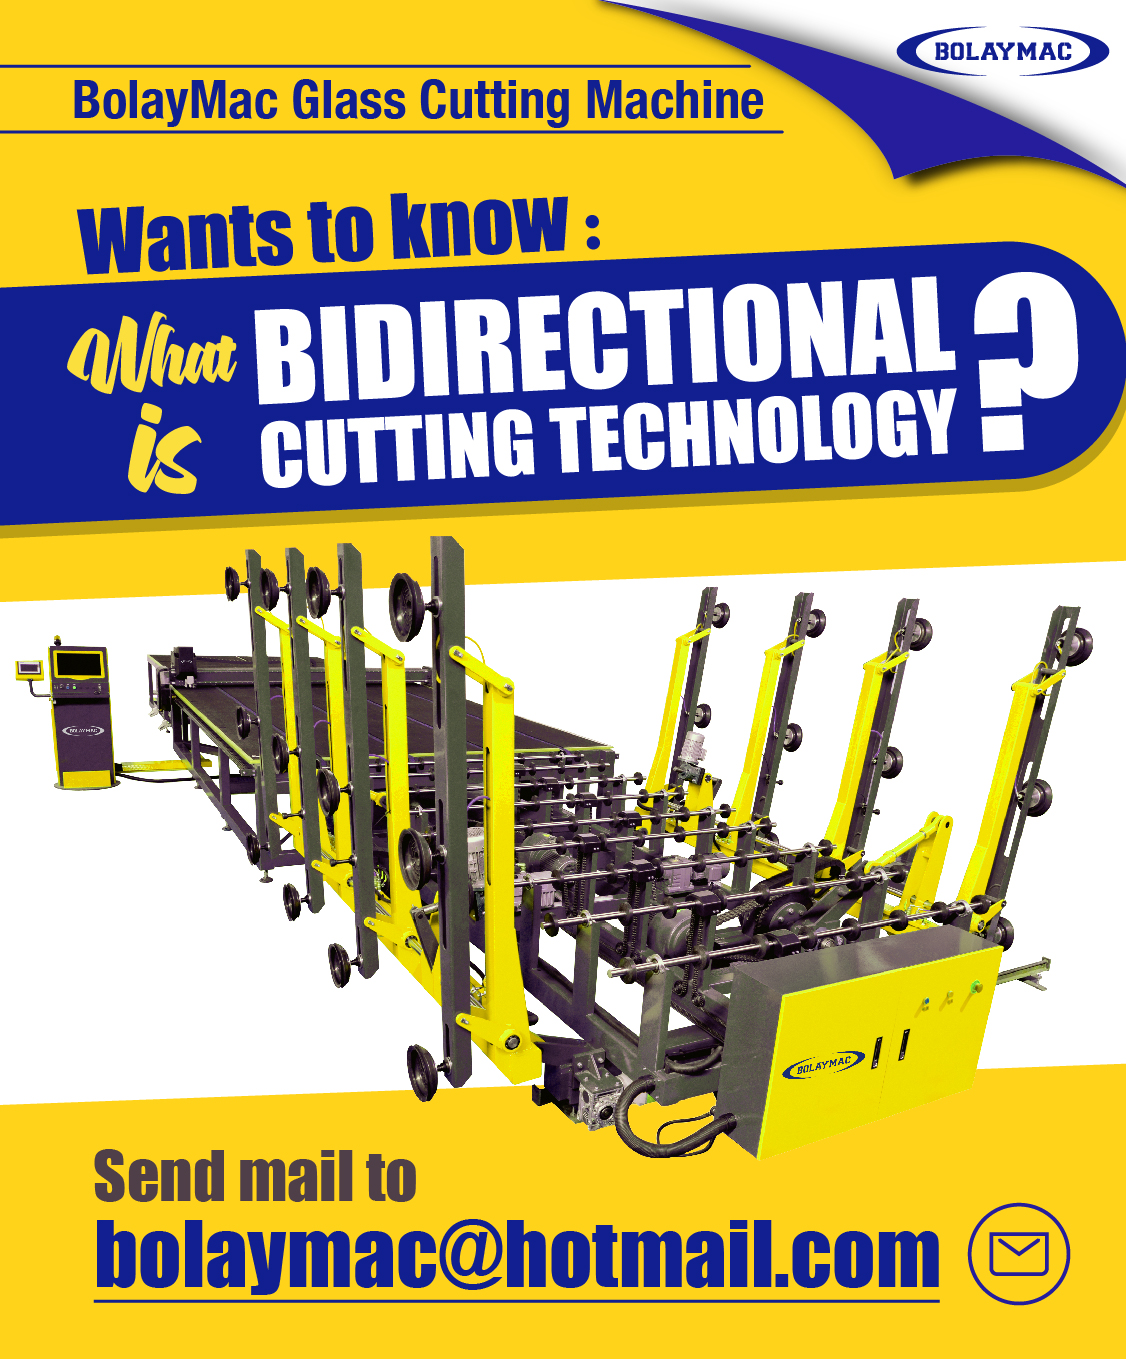 Bidirectional cutting technology of Glass Cutting Machine